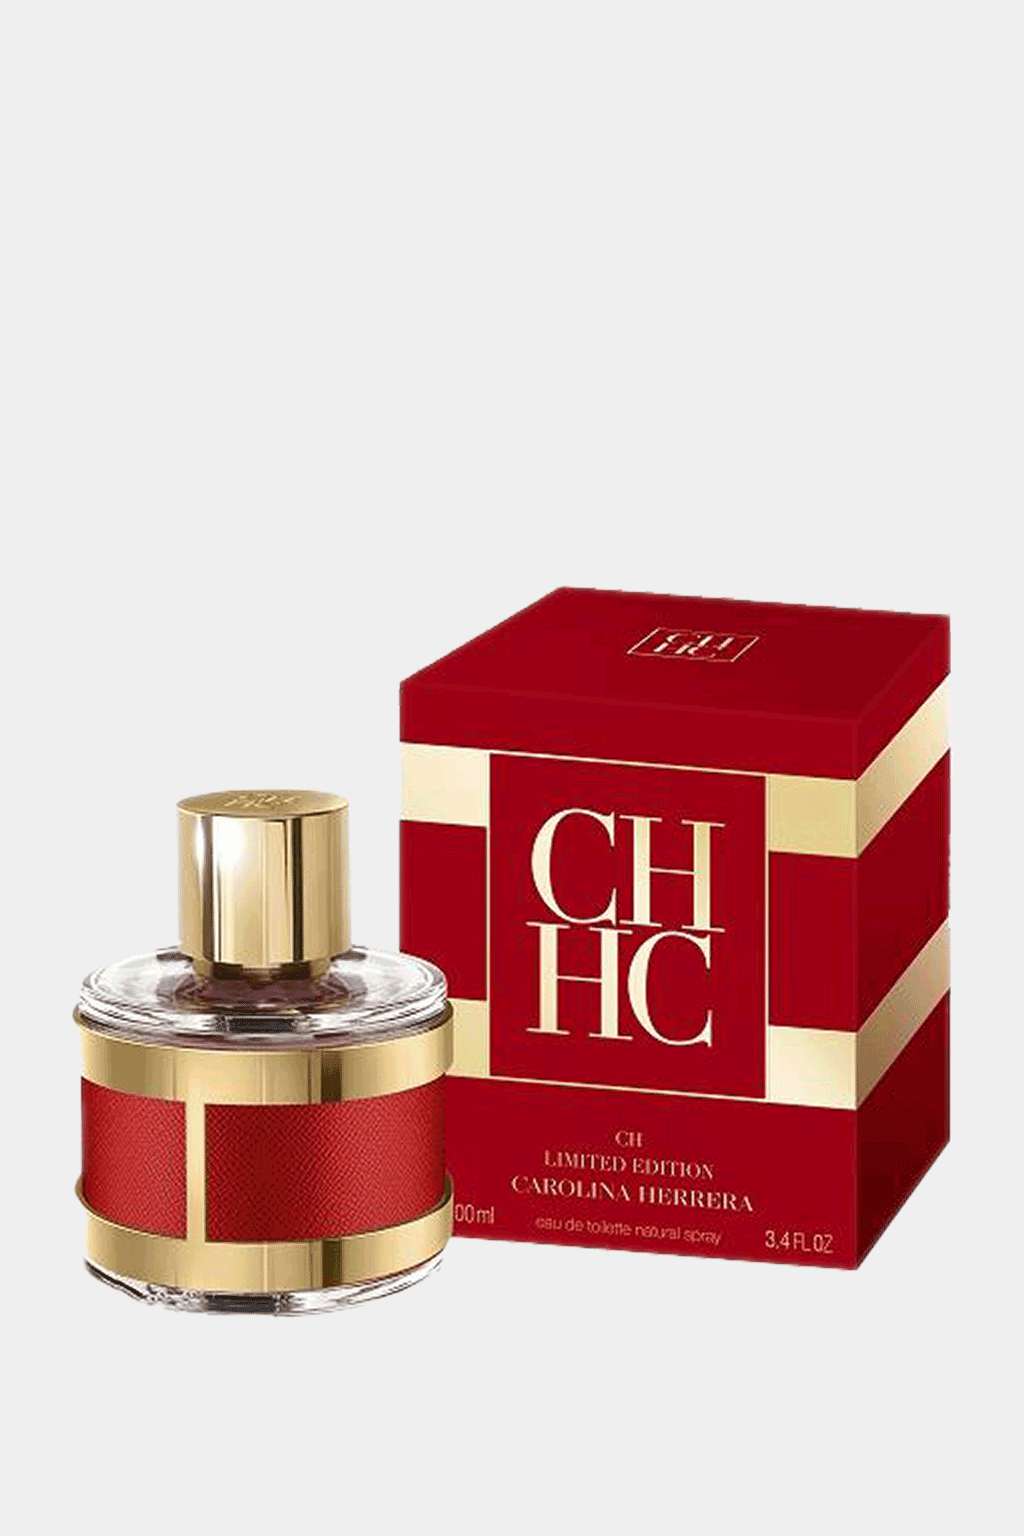 Carolina Herrera - CH HC Limited Edition Eau de parfum